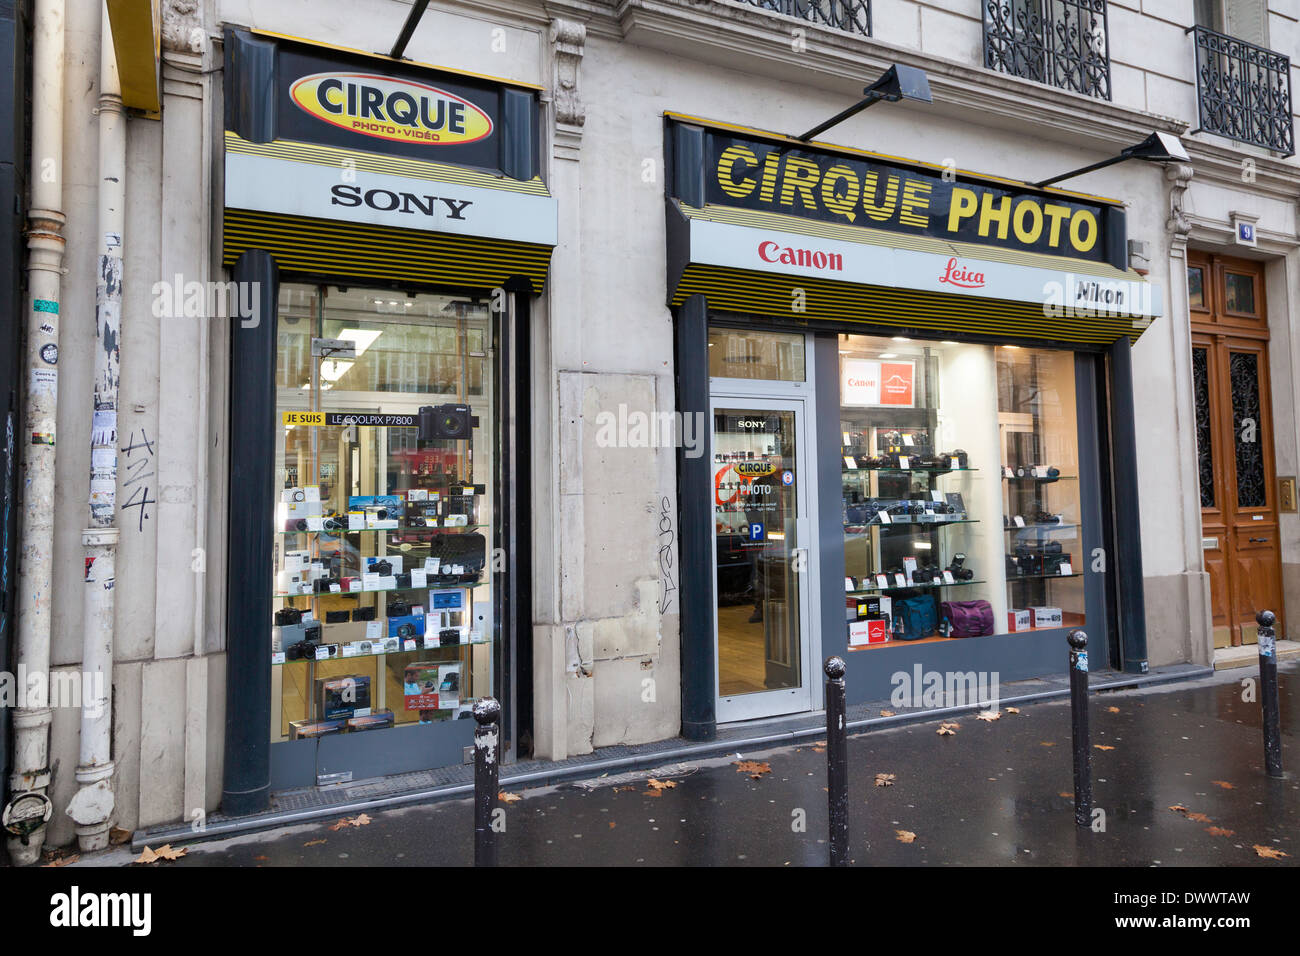 Cirque Foto Kamera Shop, Boulevard Beaumarchais, Paris, Frankreich Stockfoto